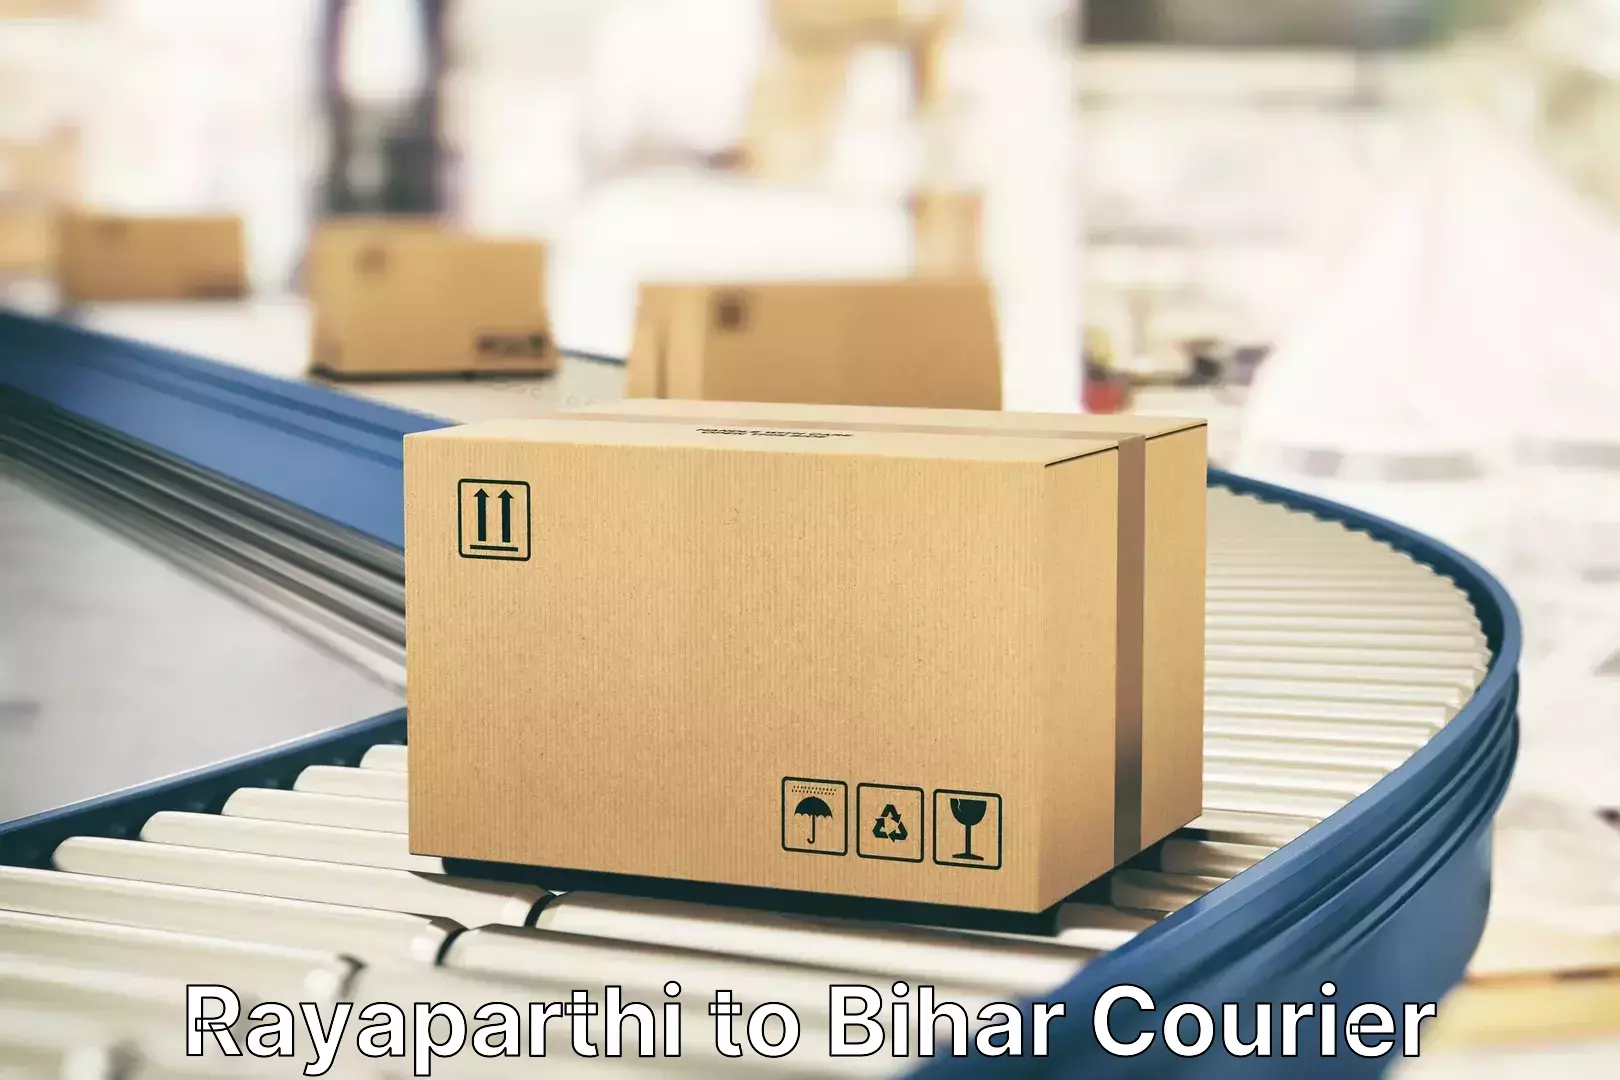 Efficient luggage delivery Rayaparthi to Bihar